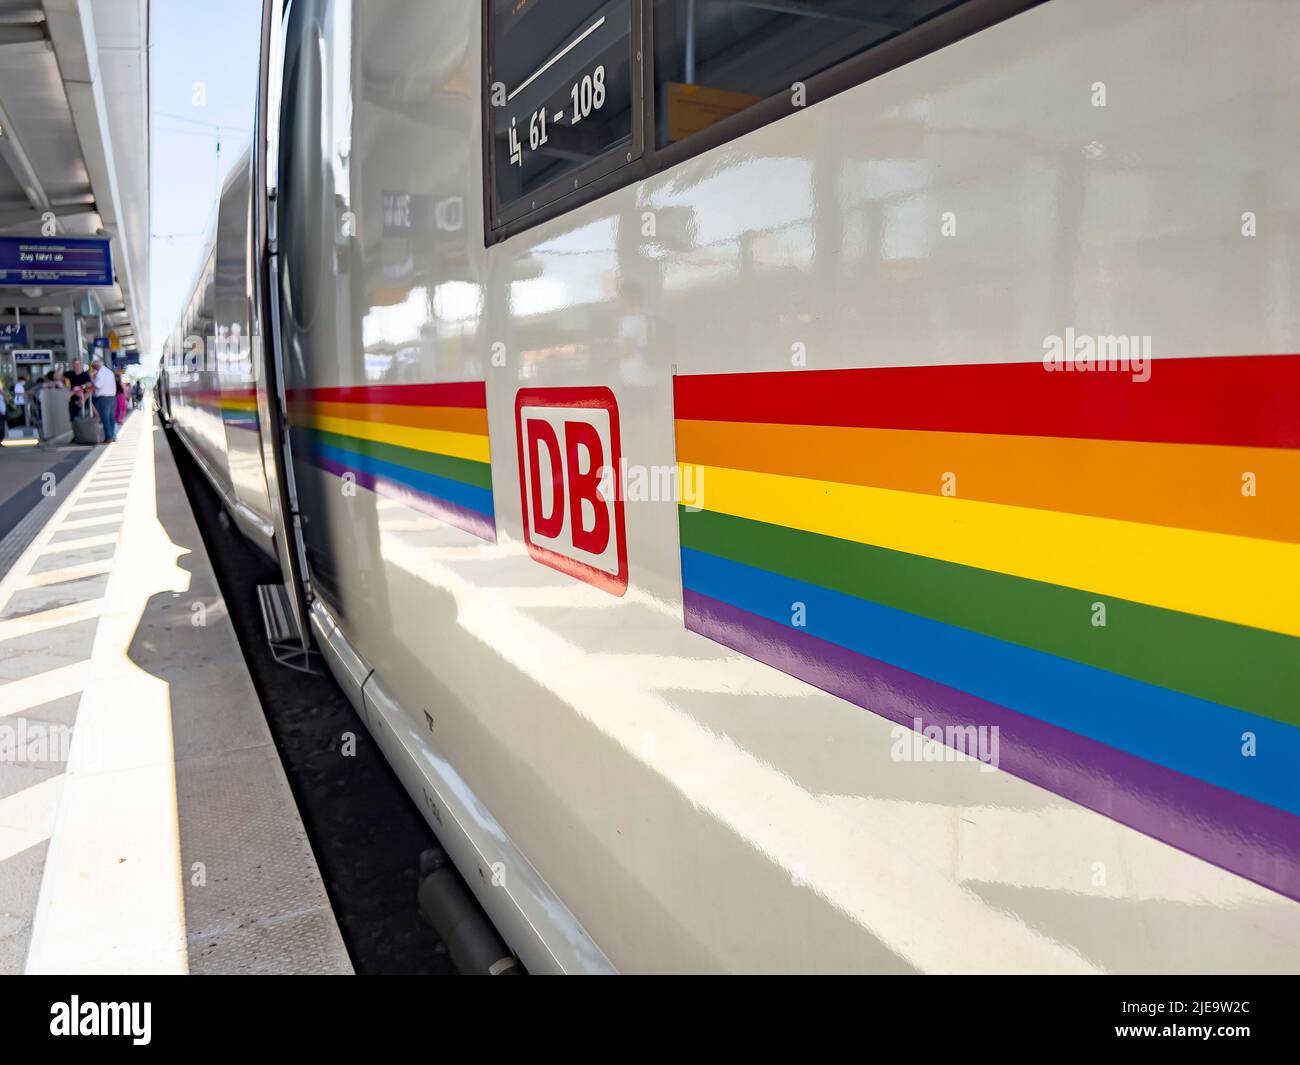 DB Bahn ICE train with Rainbow design for LGBT, LGBTQIA+  on Juni 23, 2022  in Hamburg, Germany.  © Peter Schatz / Alamy Stock Photos Stock Photo